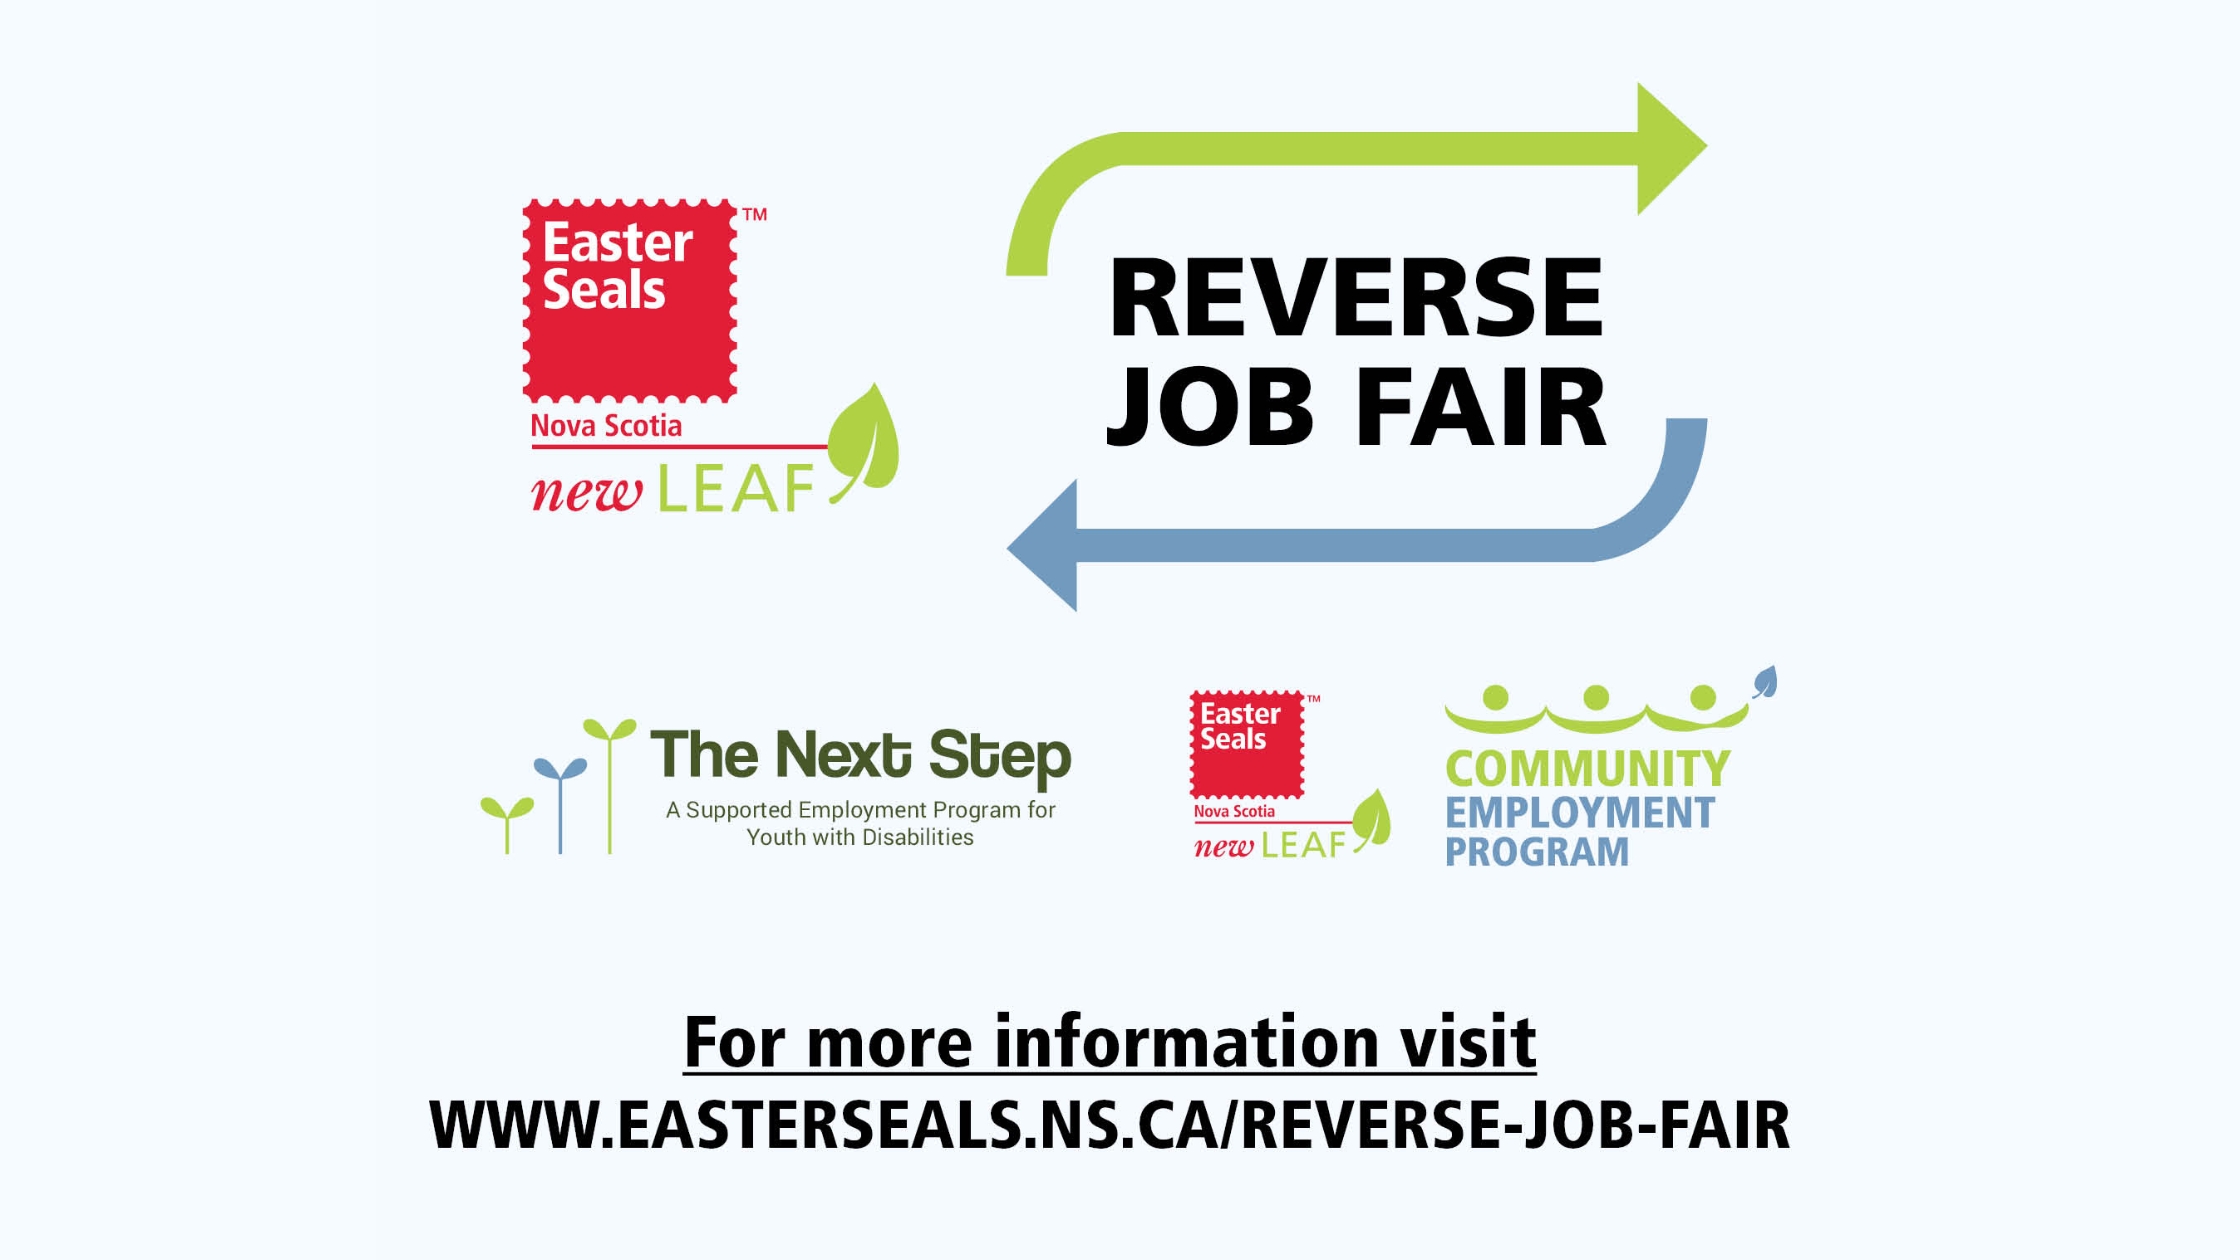 The New Leaf Reverse Job Fair